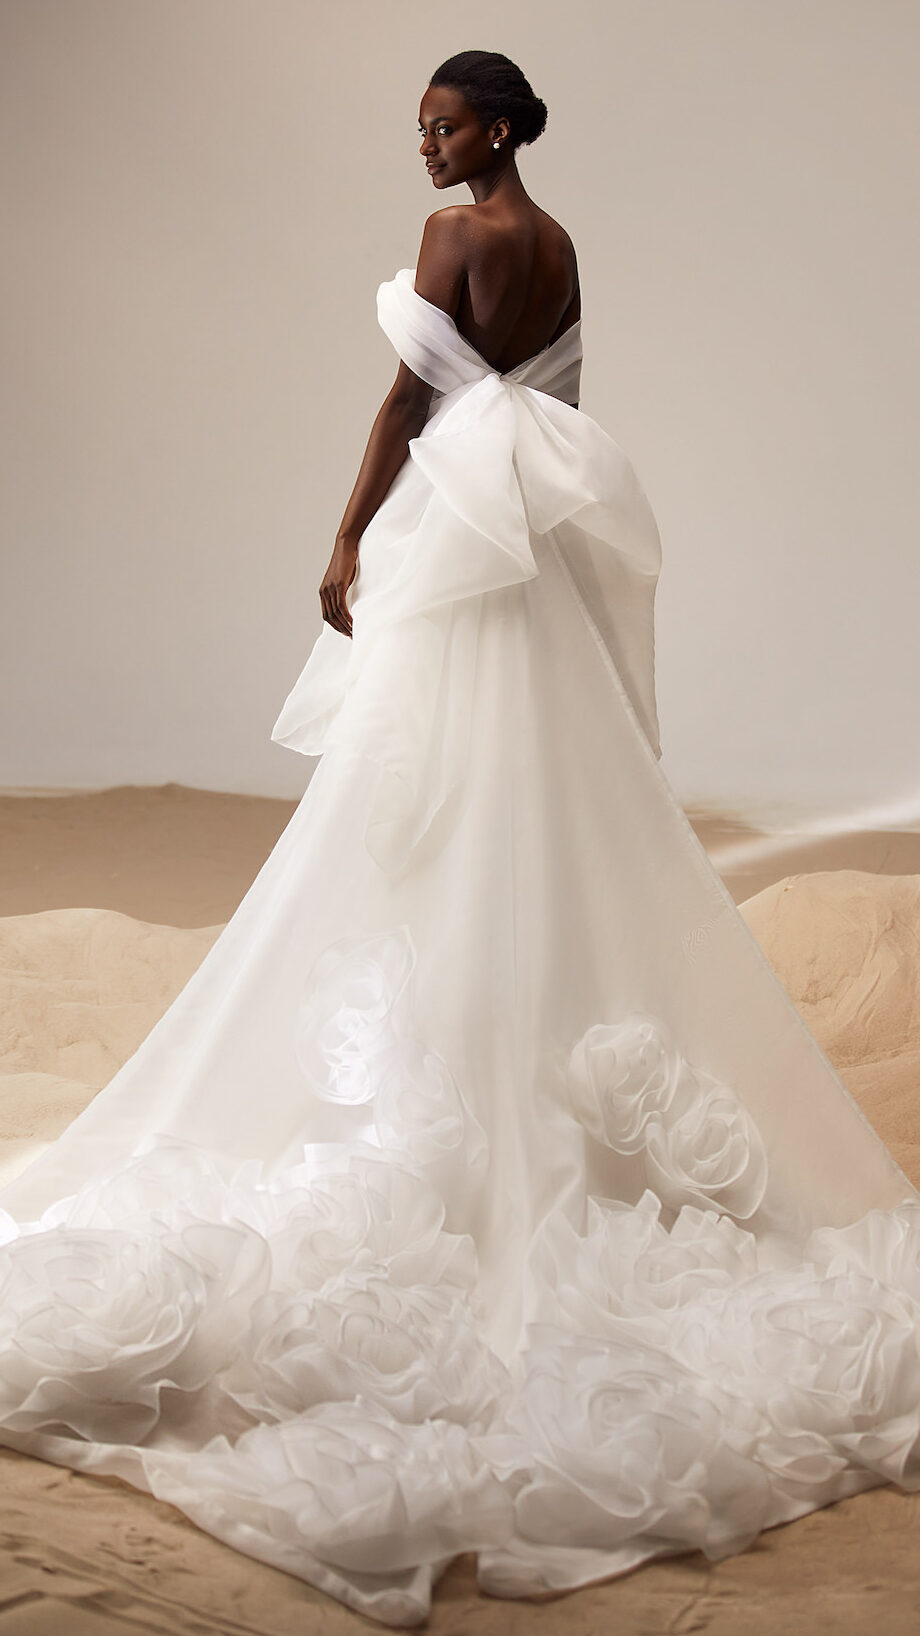 Glamorous Wedding Dresses by Milla Nova - Joelle white lace